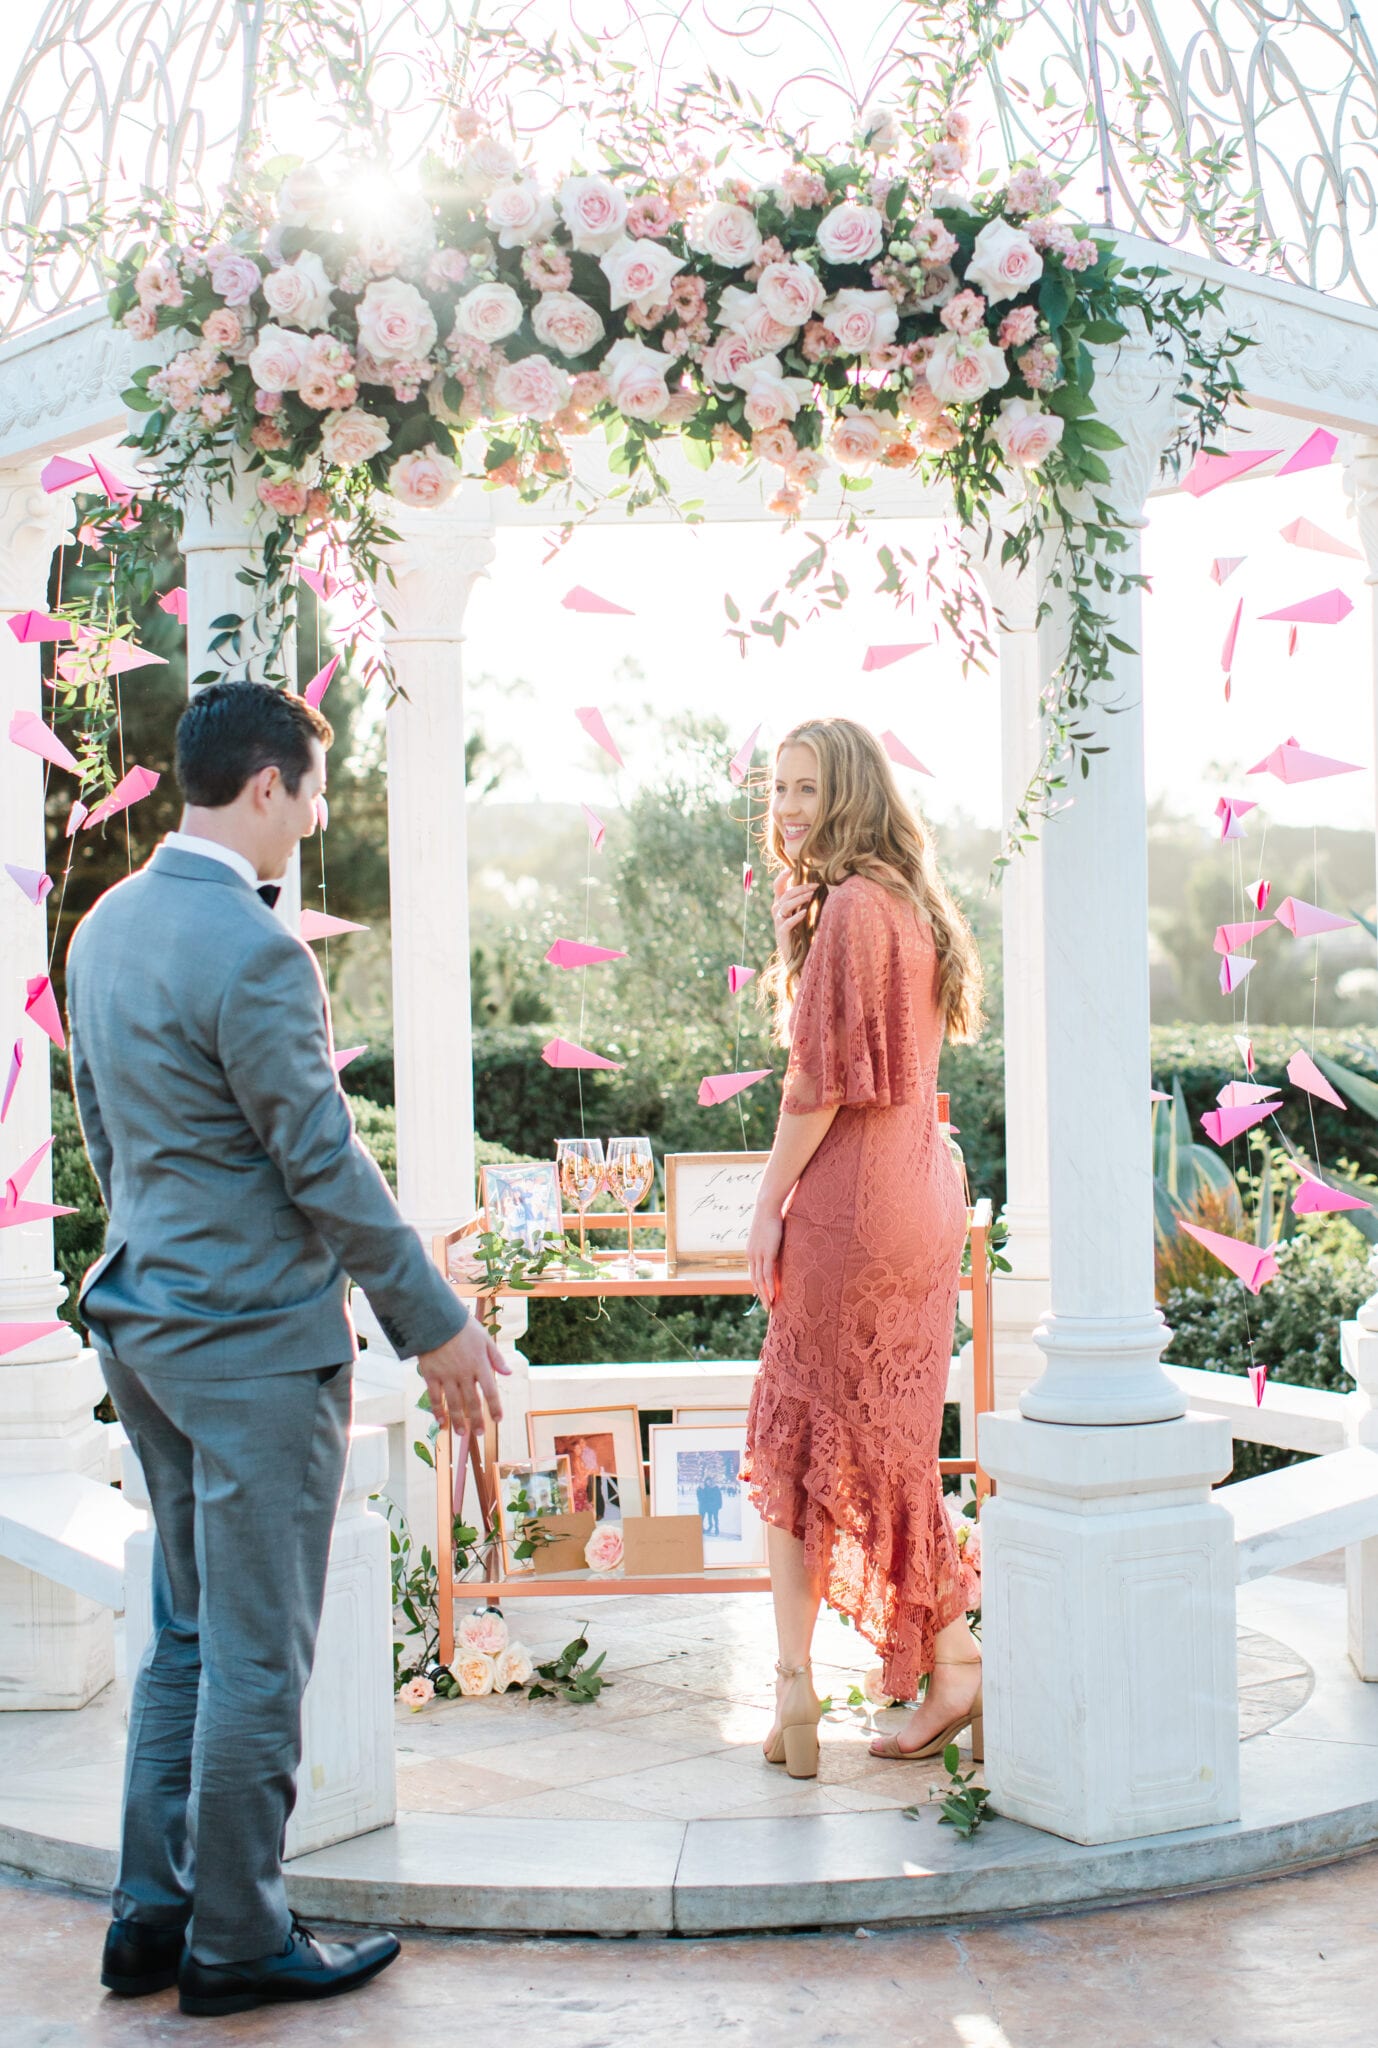 wedding proposal in front of gazebo at monarch beach resort